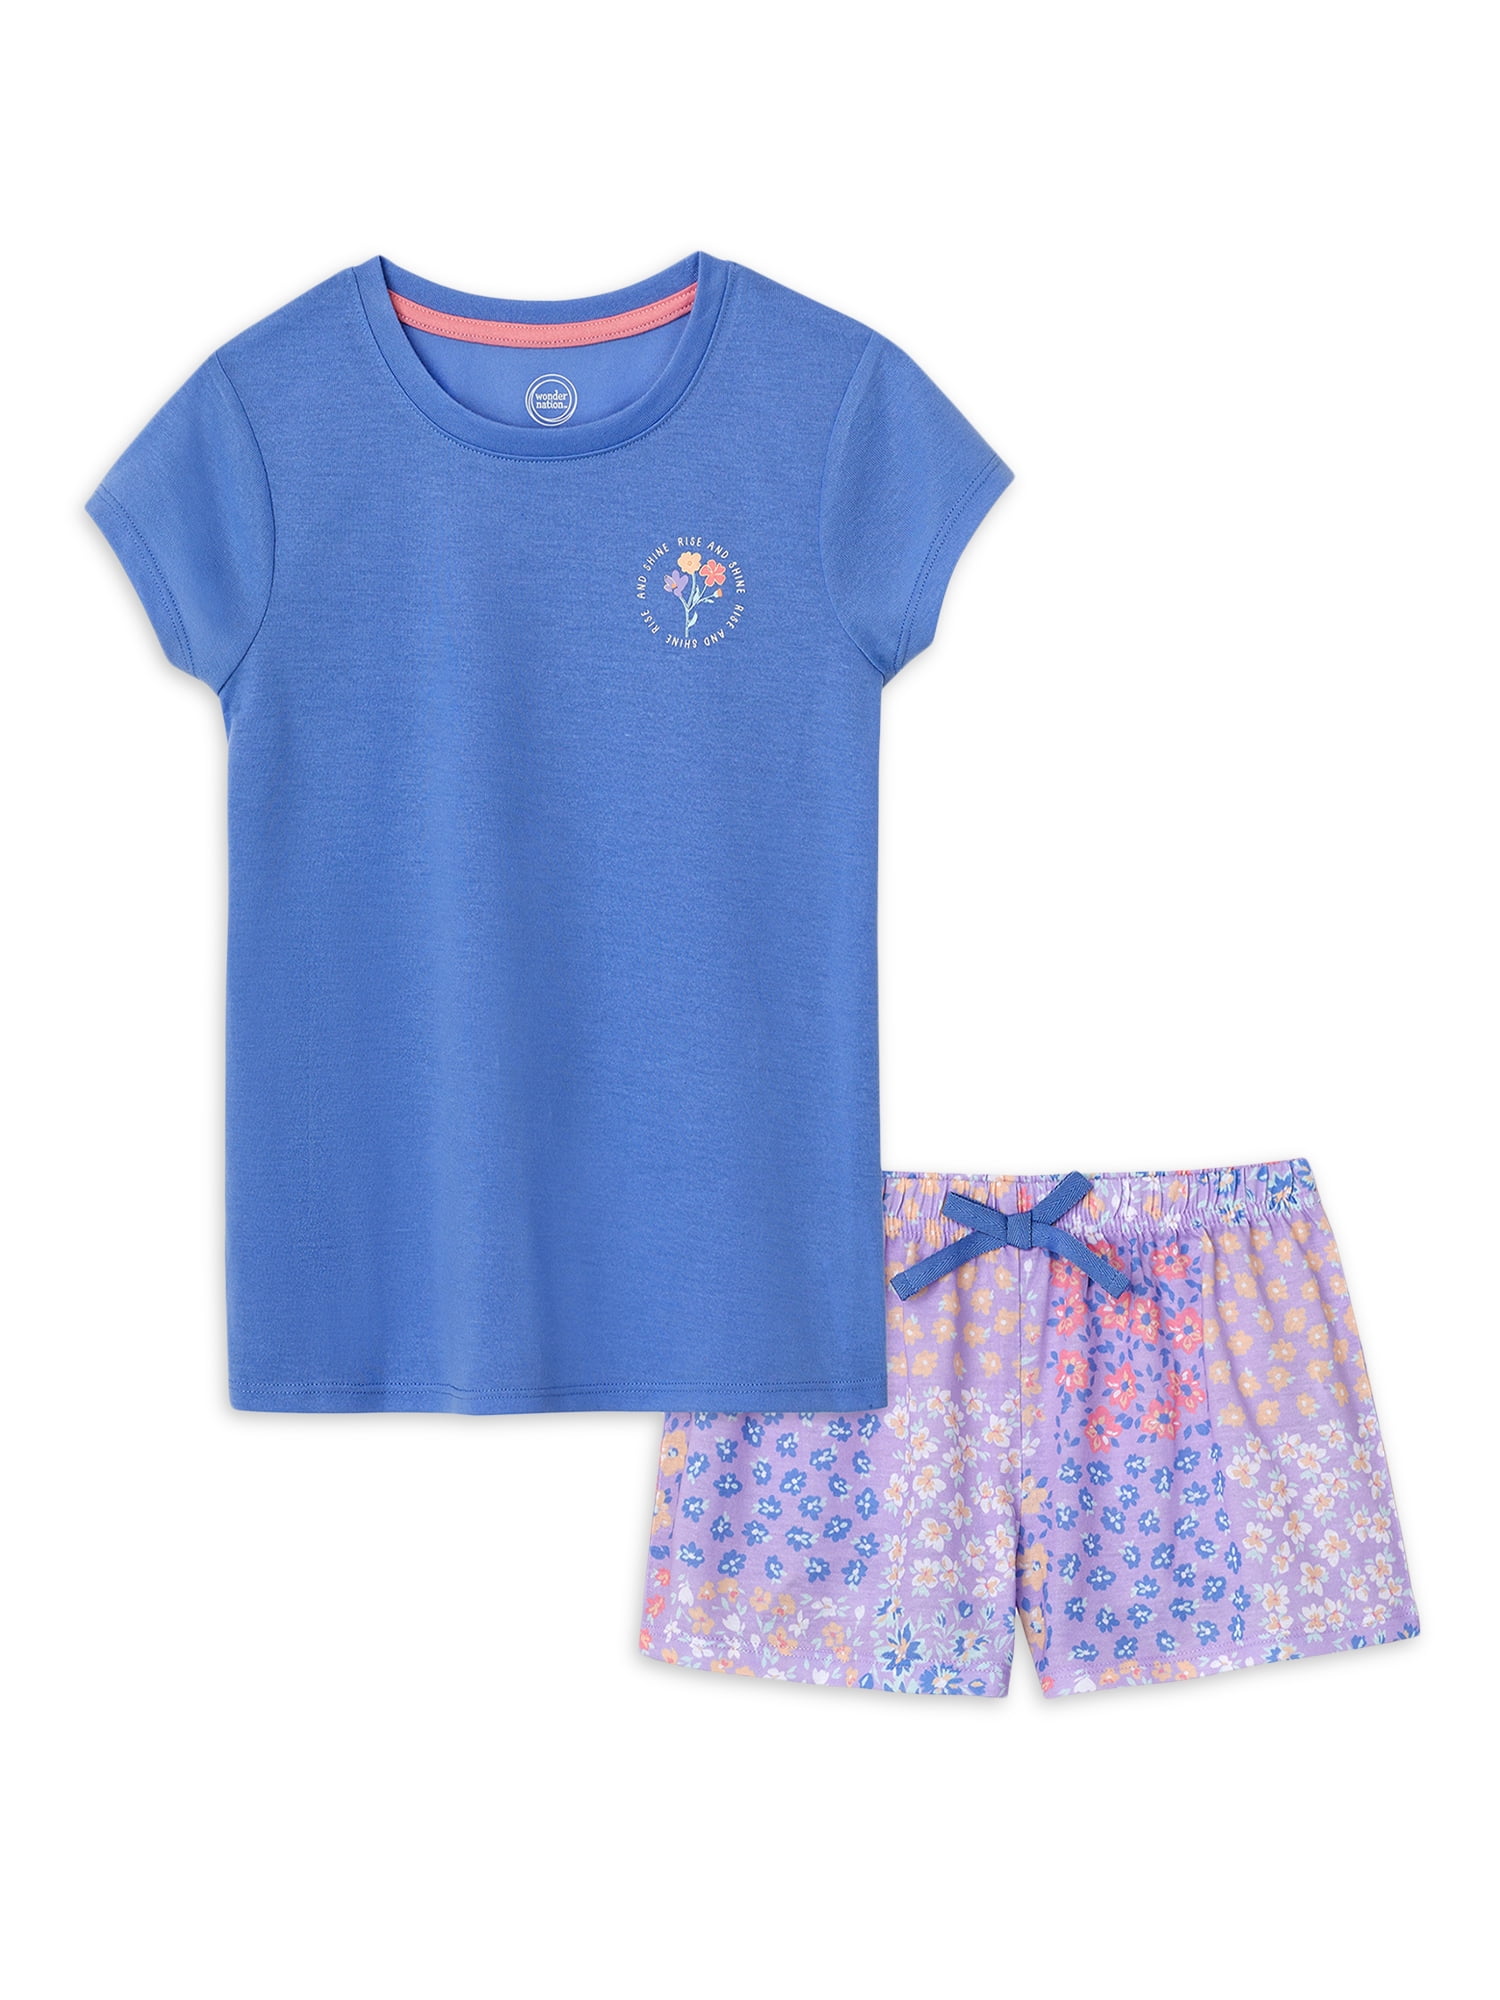 So Berry Cute Shorts Pajamas - sleepover pjs, girls shorts set